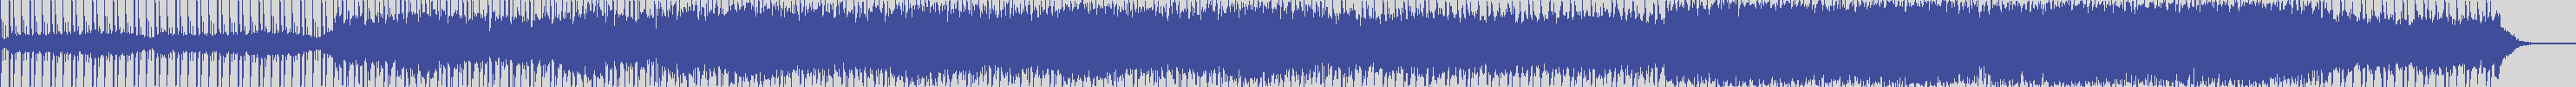 vitti_records [VIT020] Deep L - Angling [Original Mix] audio wave form